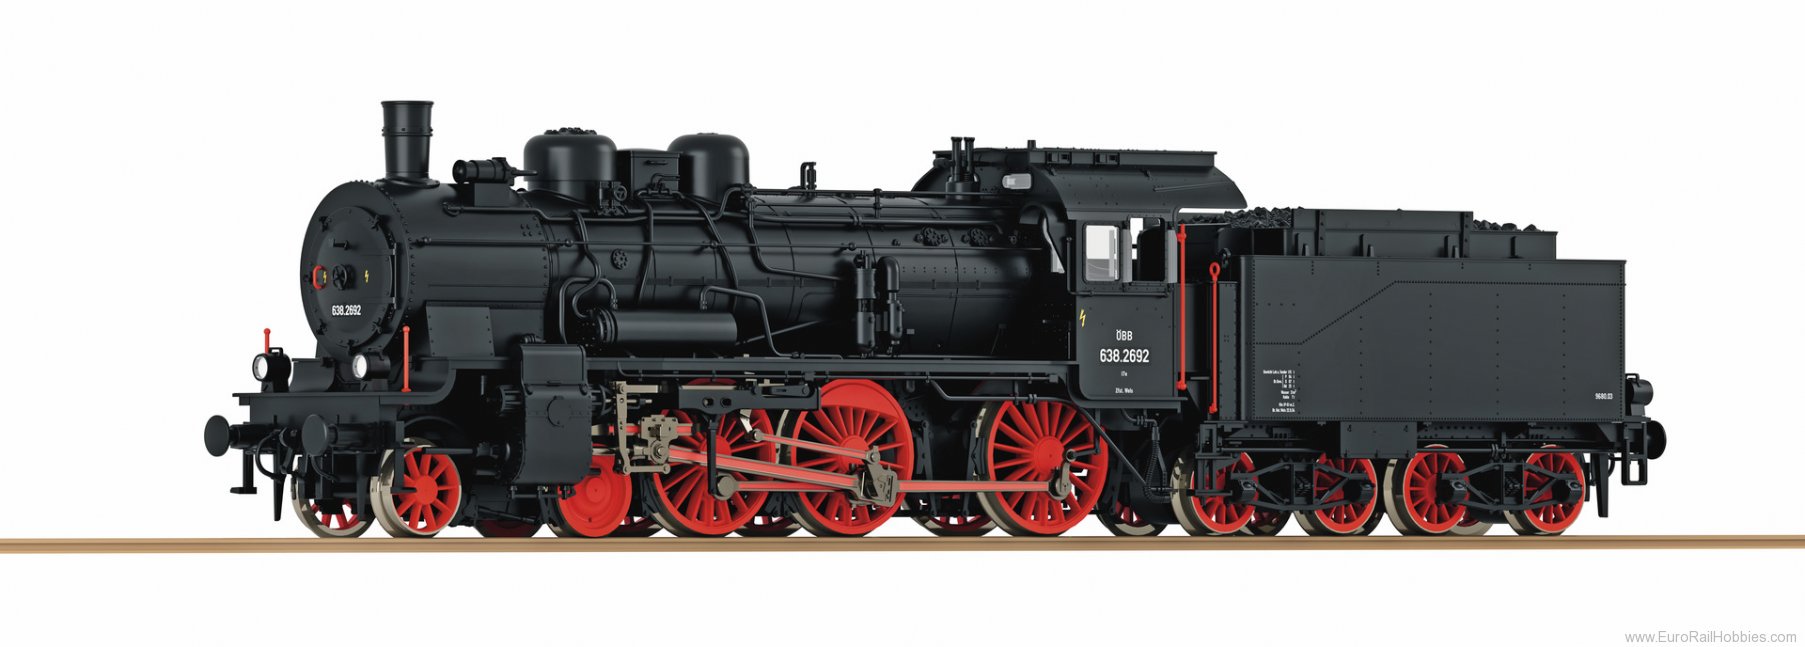 Roco 71393 Steam locomotive 638.2692, ÃBB (DC Analog)